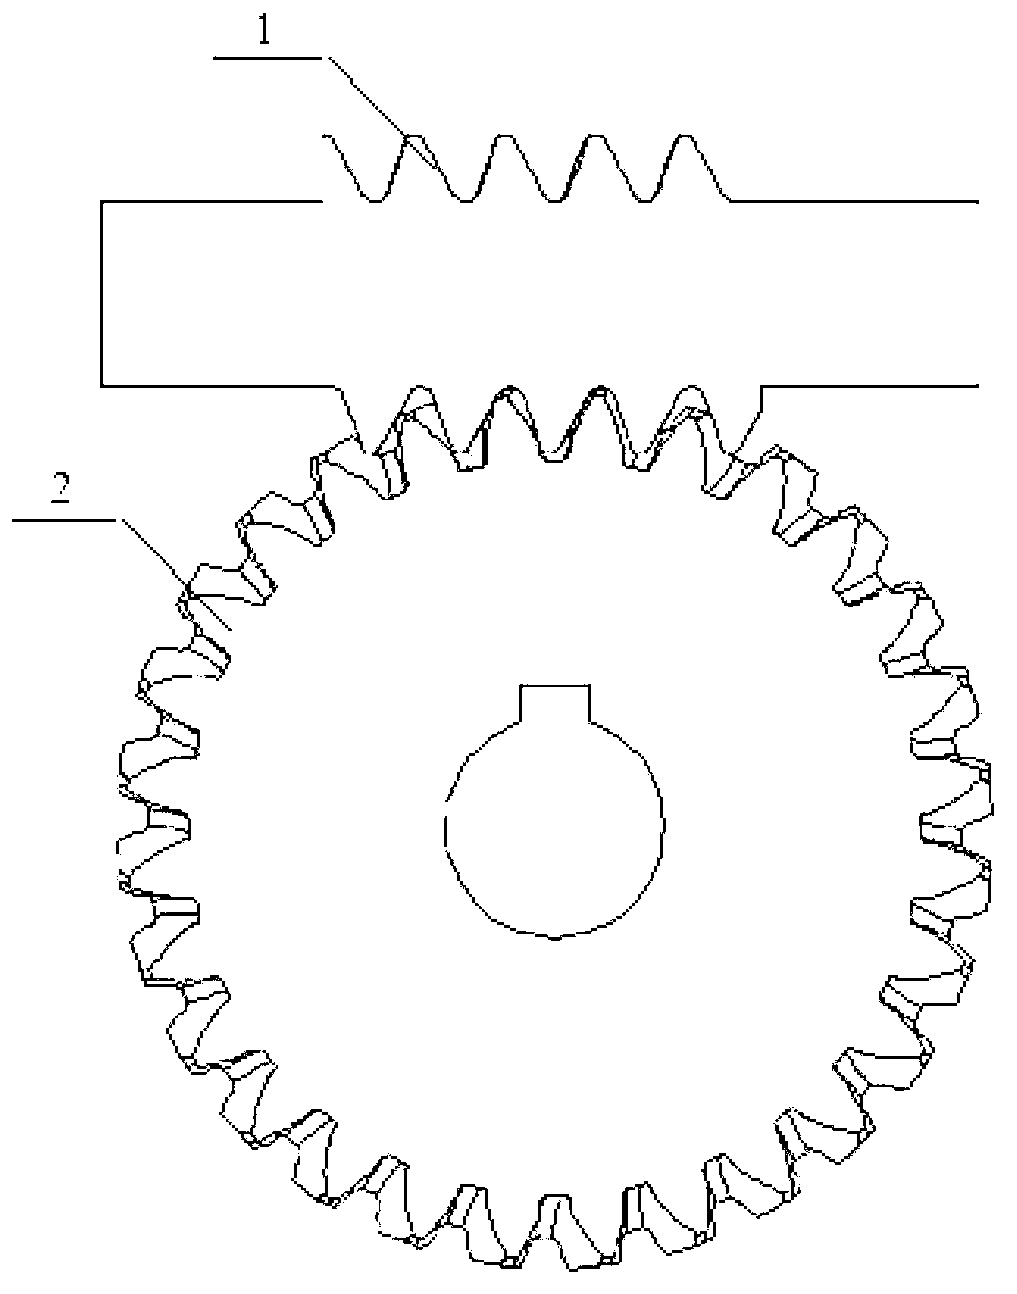 Non-symmetric involute worm and gear pair